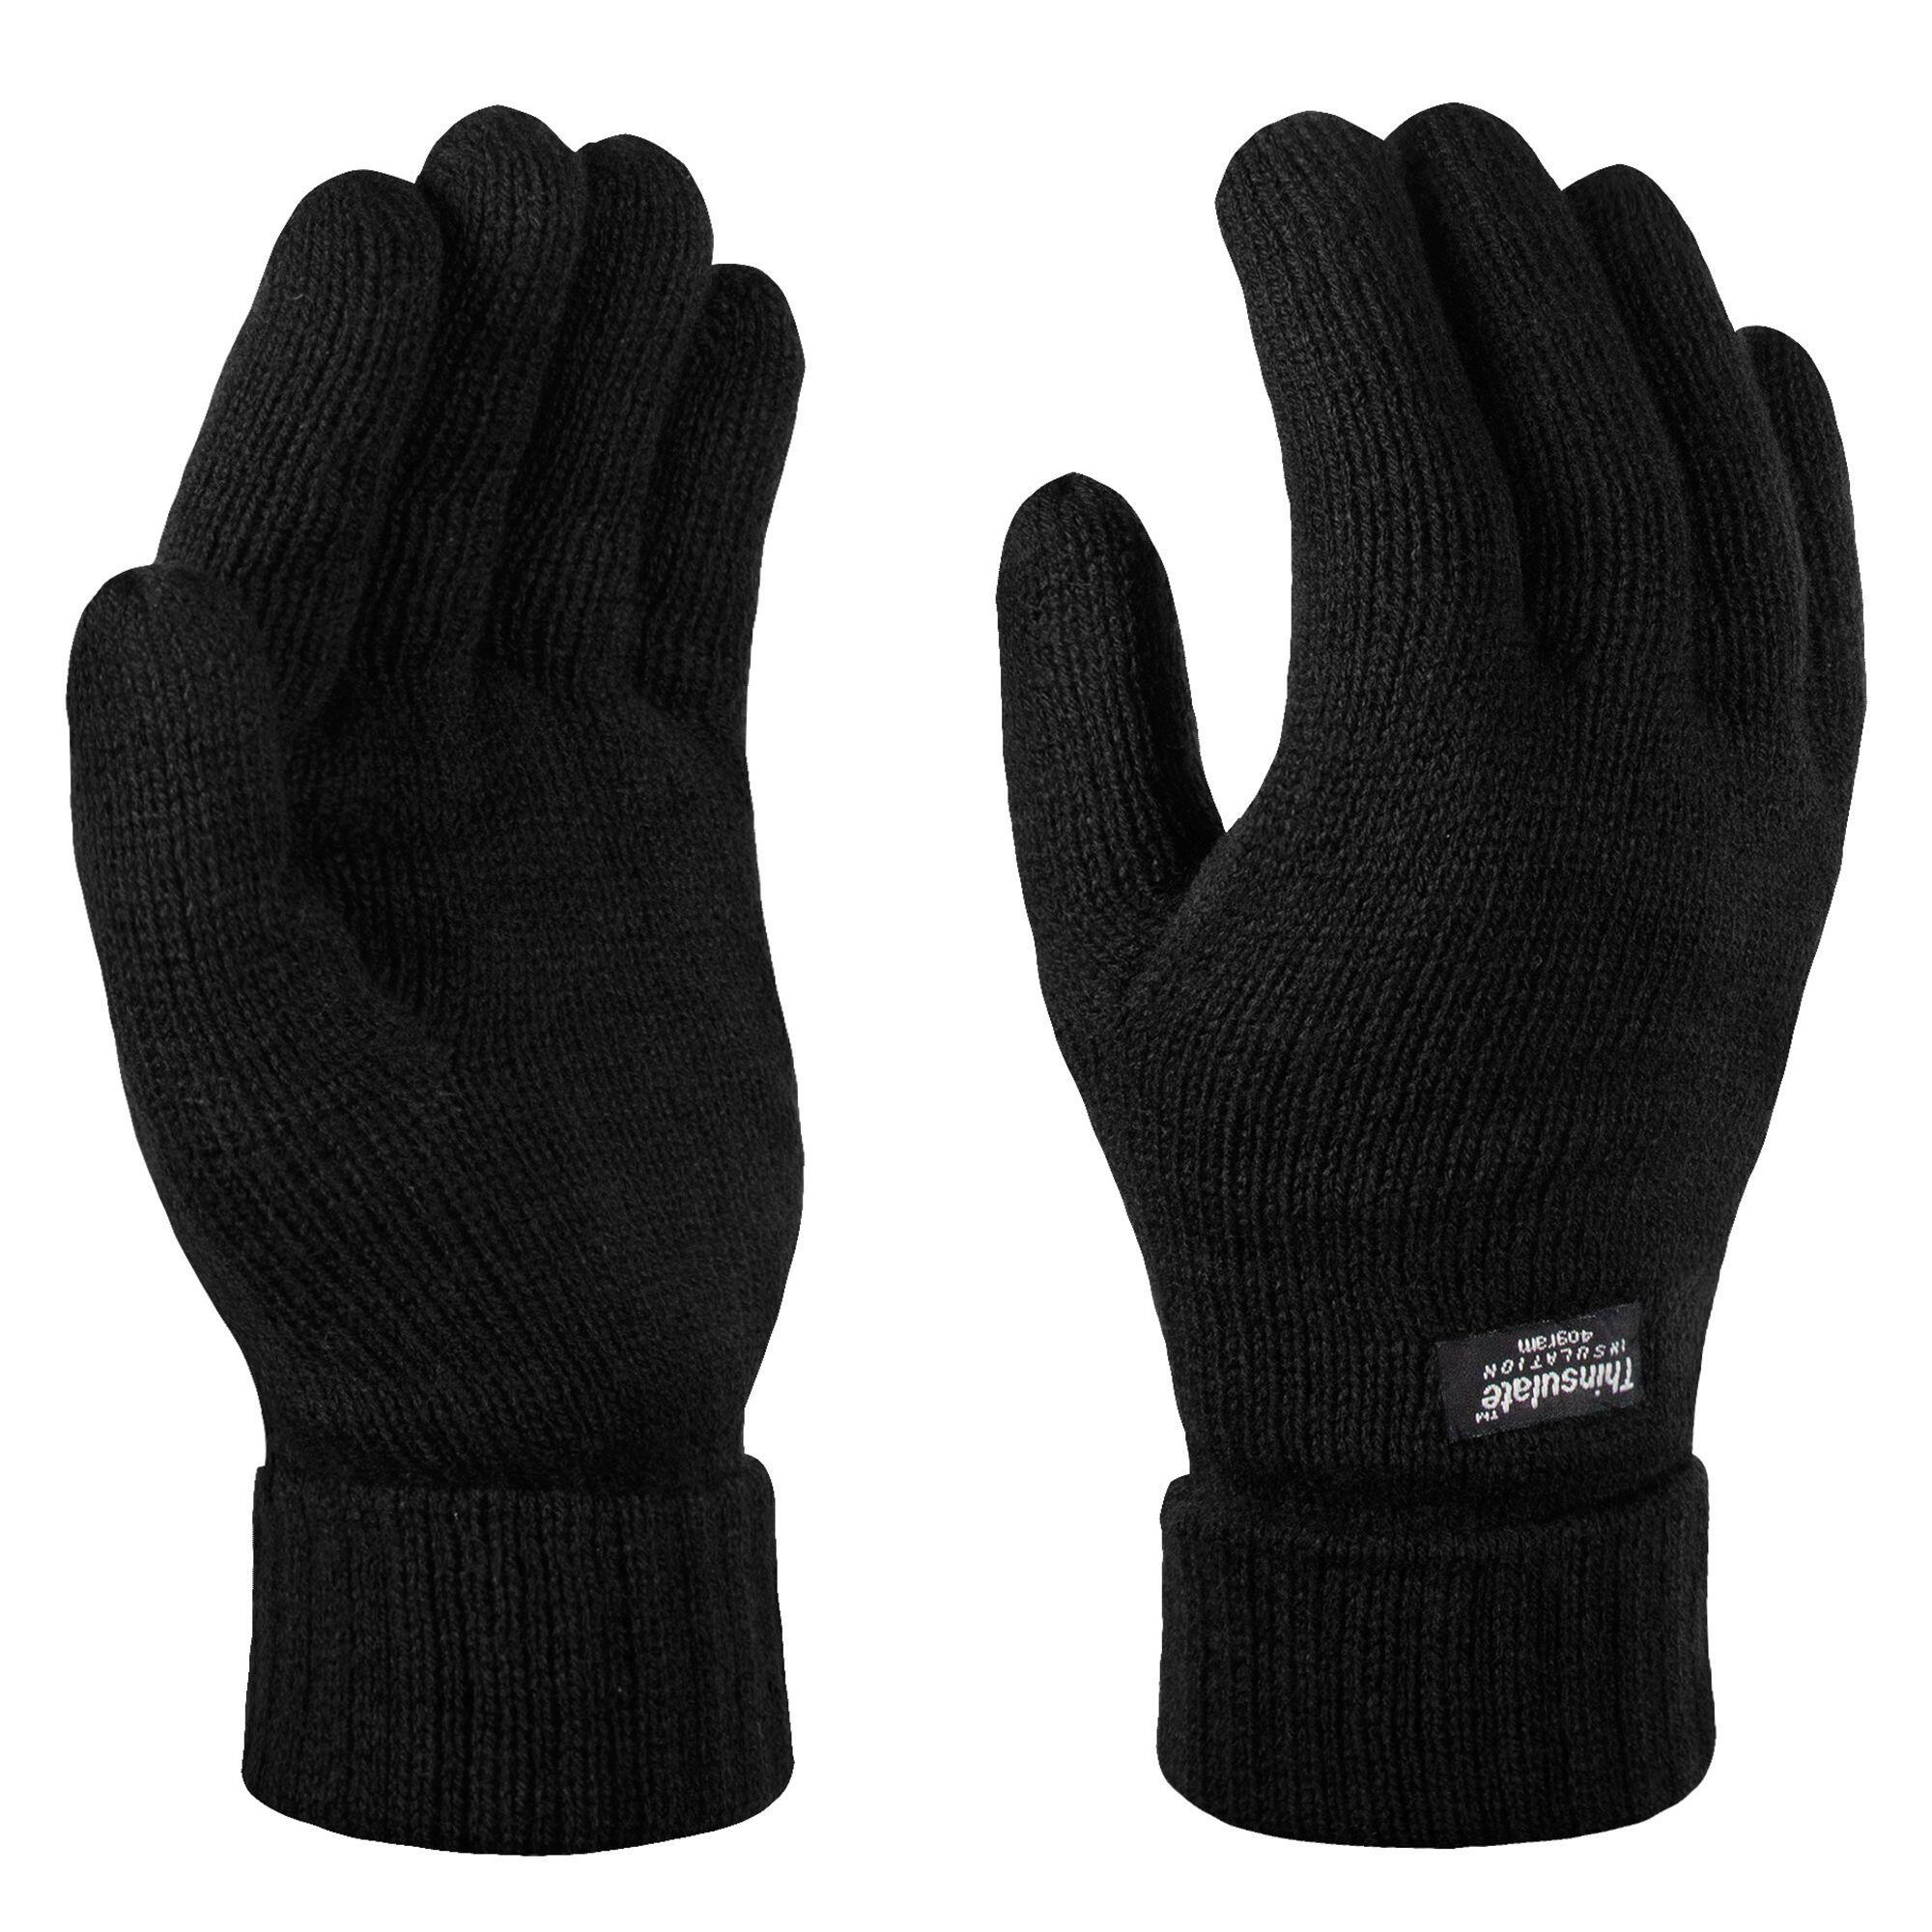 REGATTA Unisex Thinsulate Thermal Winter Gloves (Black)